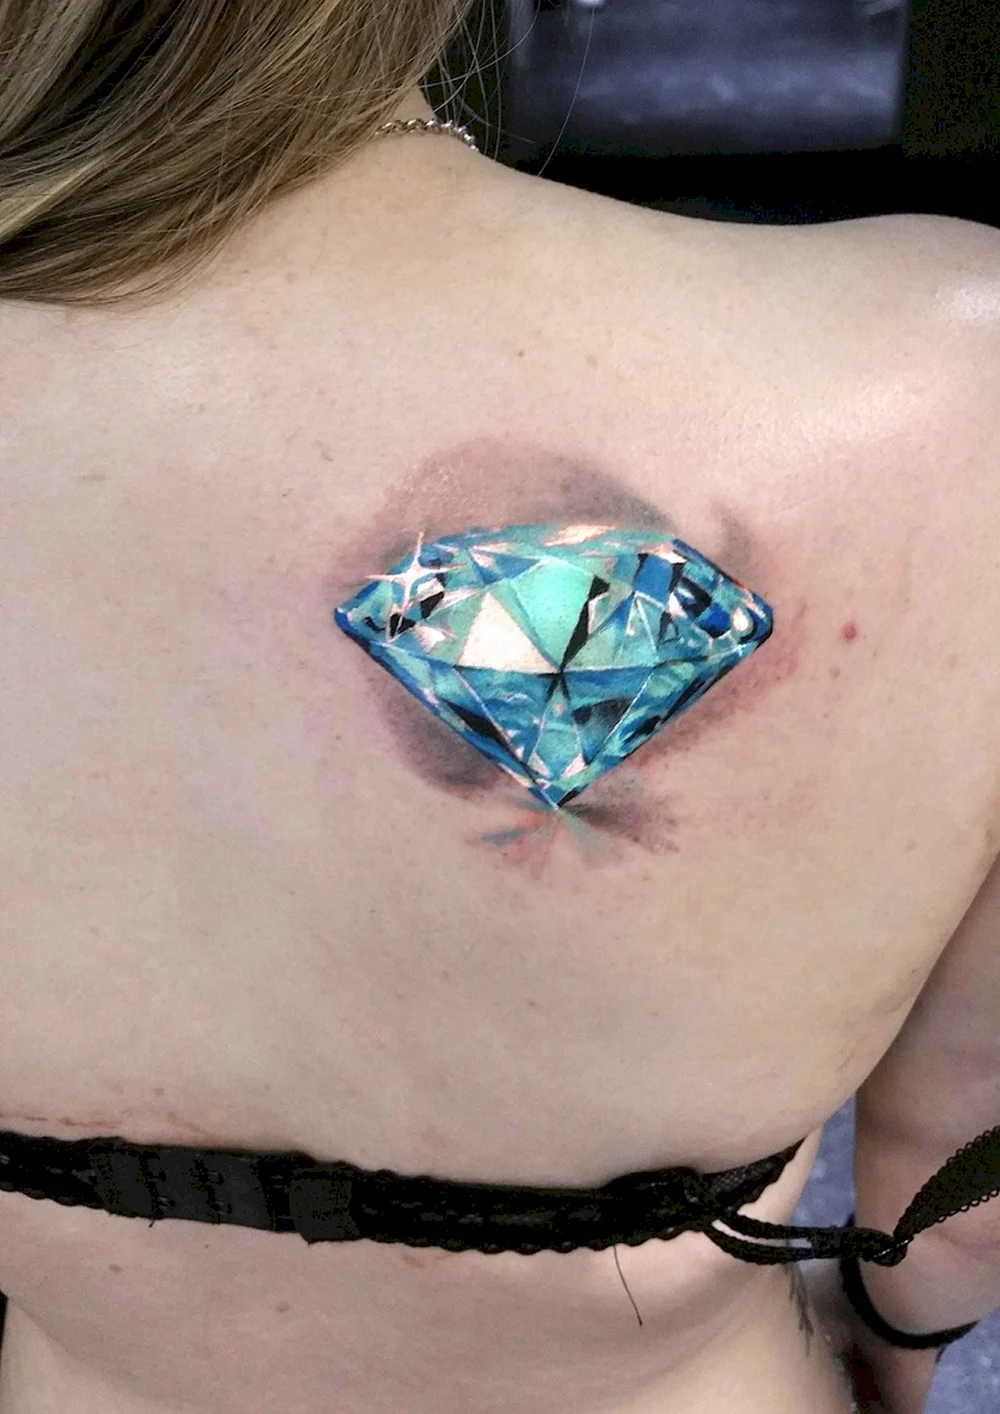 Diamond Tattoo